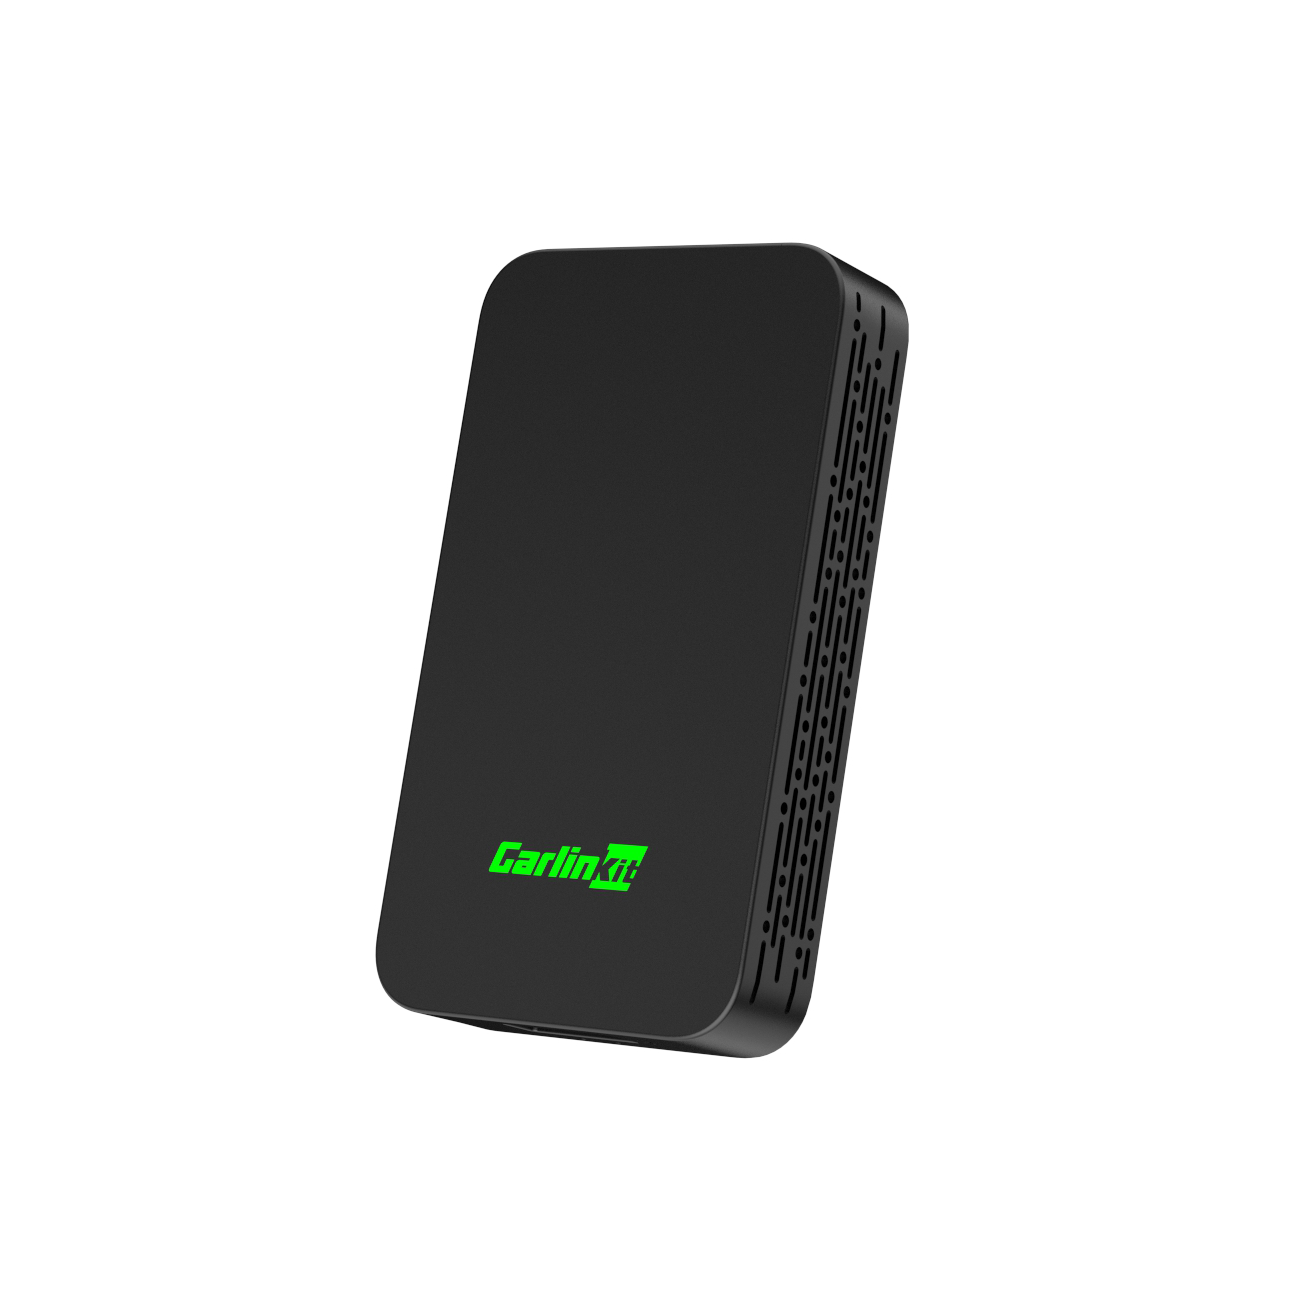 CarlinKit 5.0 2Air - Adaptateur sans fil portable CarPlay Android